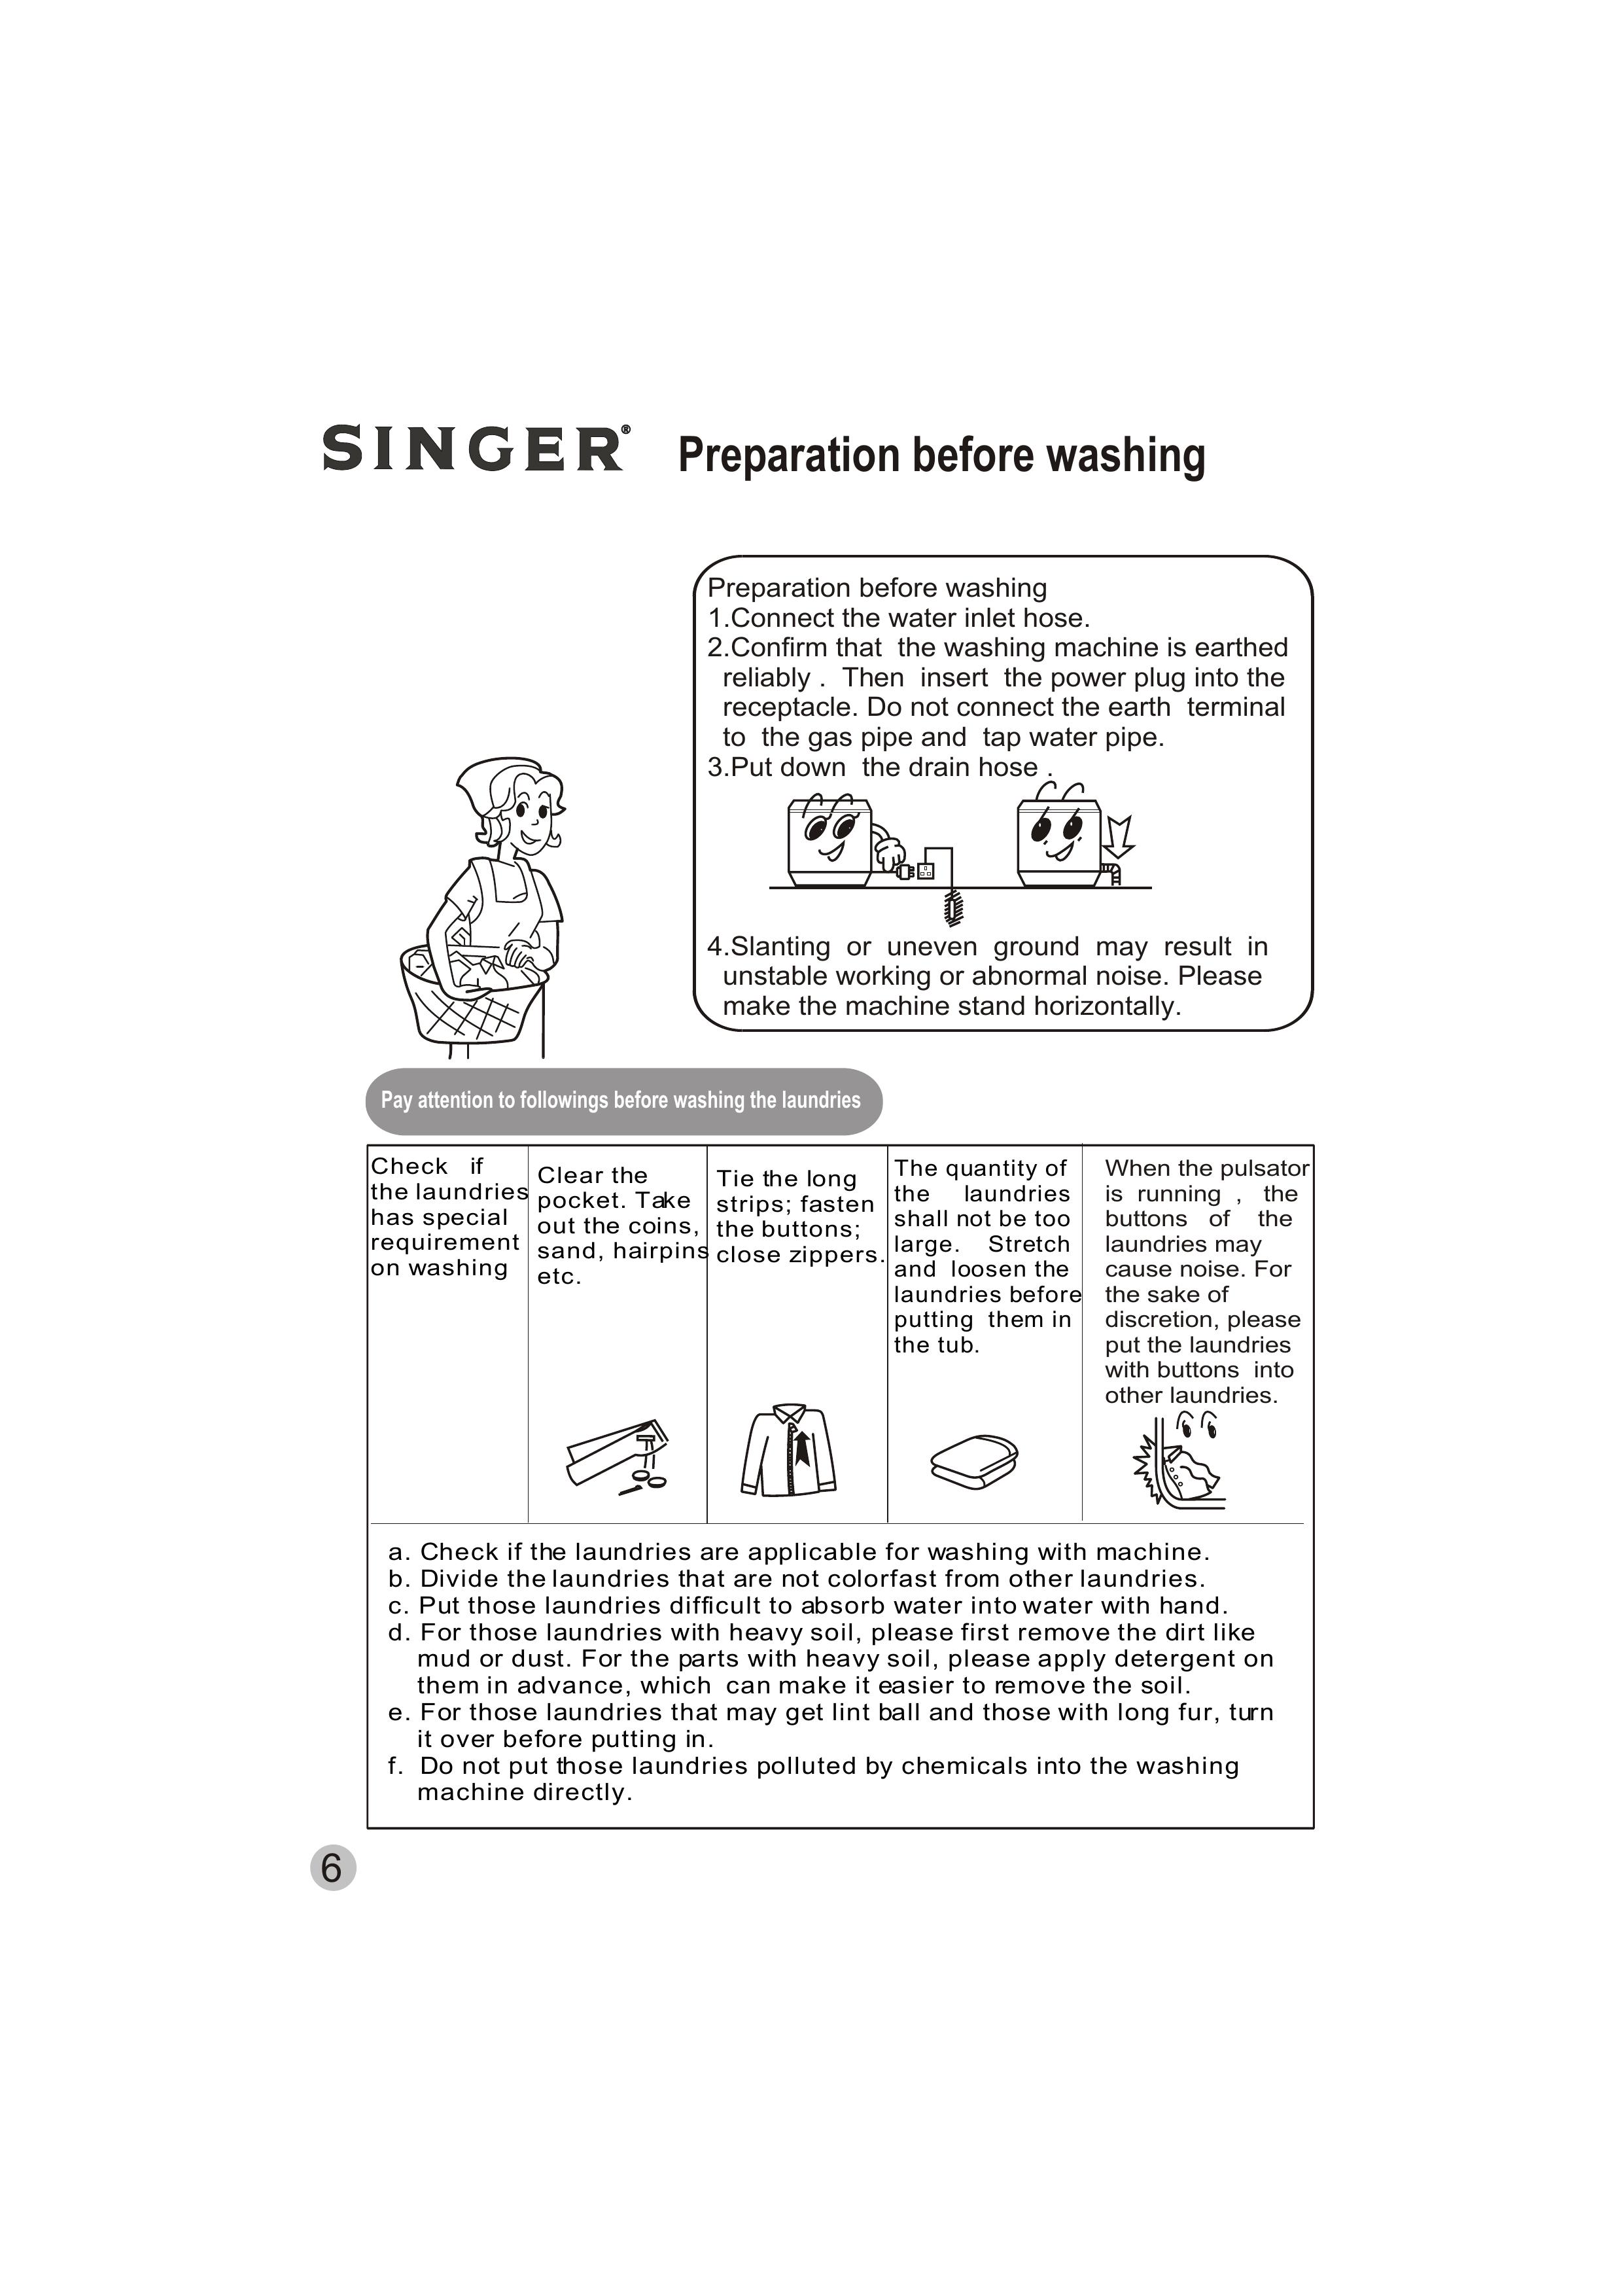 Singer WT5113 Washer/Dryer User Manual (Page 7)